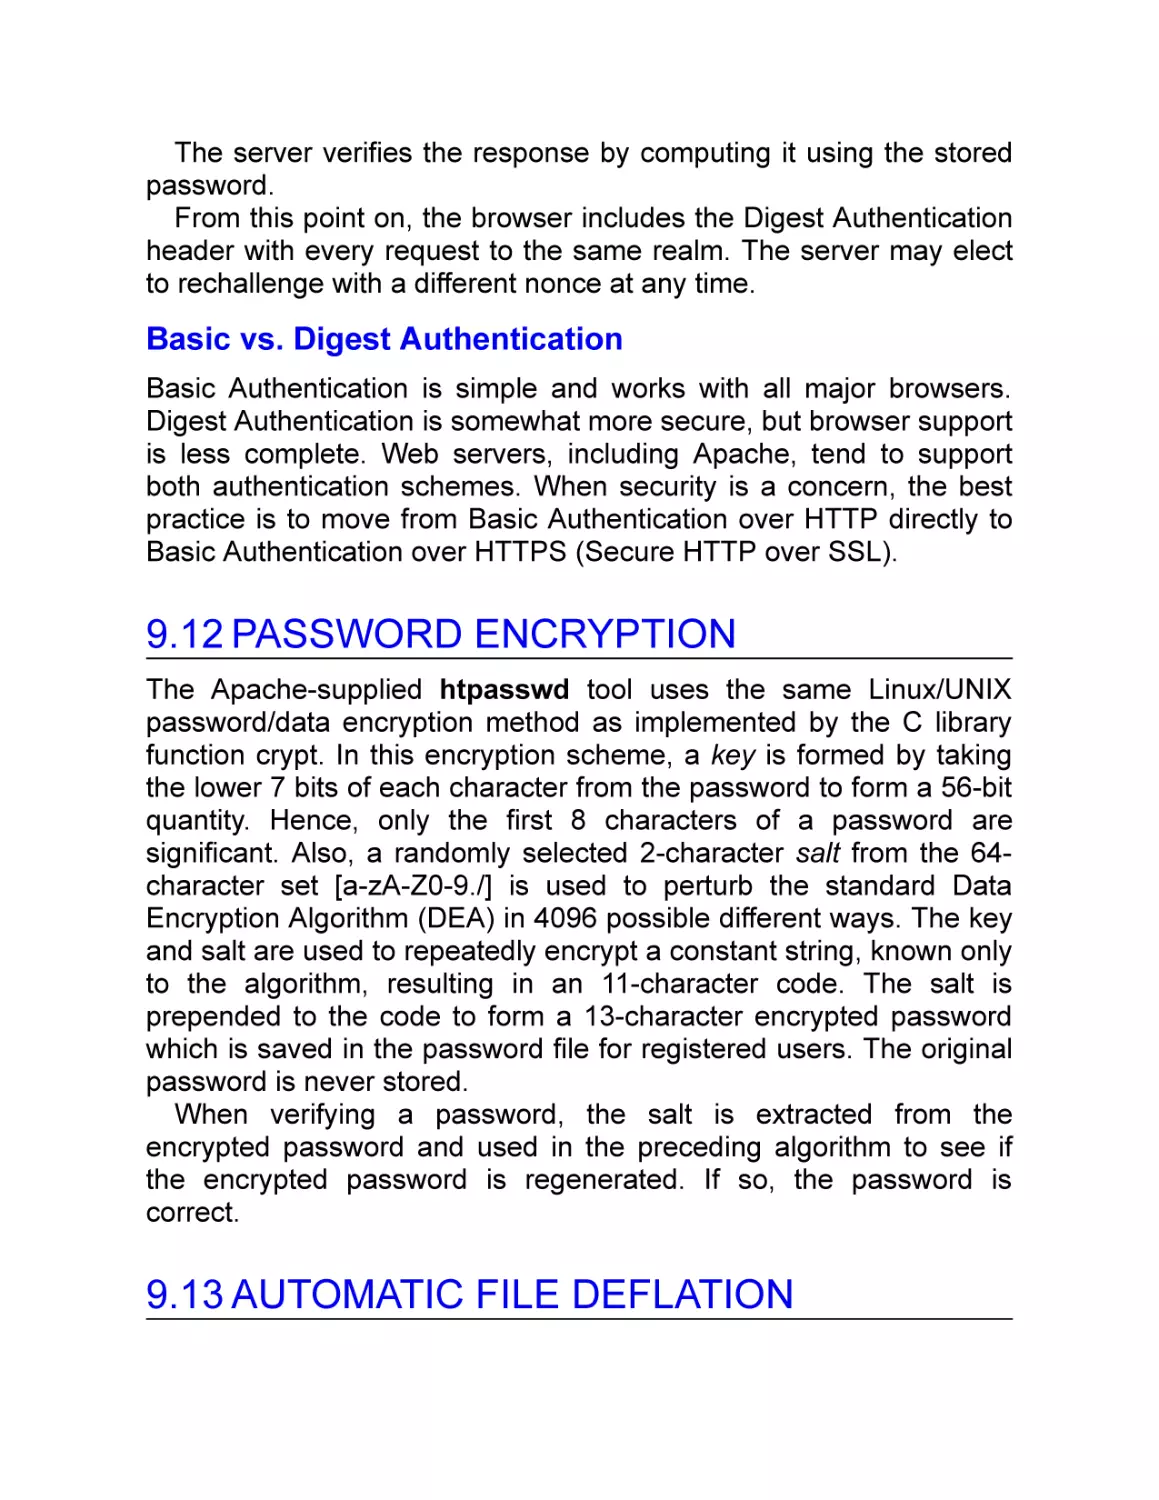 Basic vs. Digest Authentication
9.12 Password Encryption
9.13 Automatic File Deflation